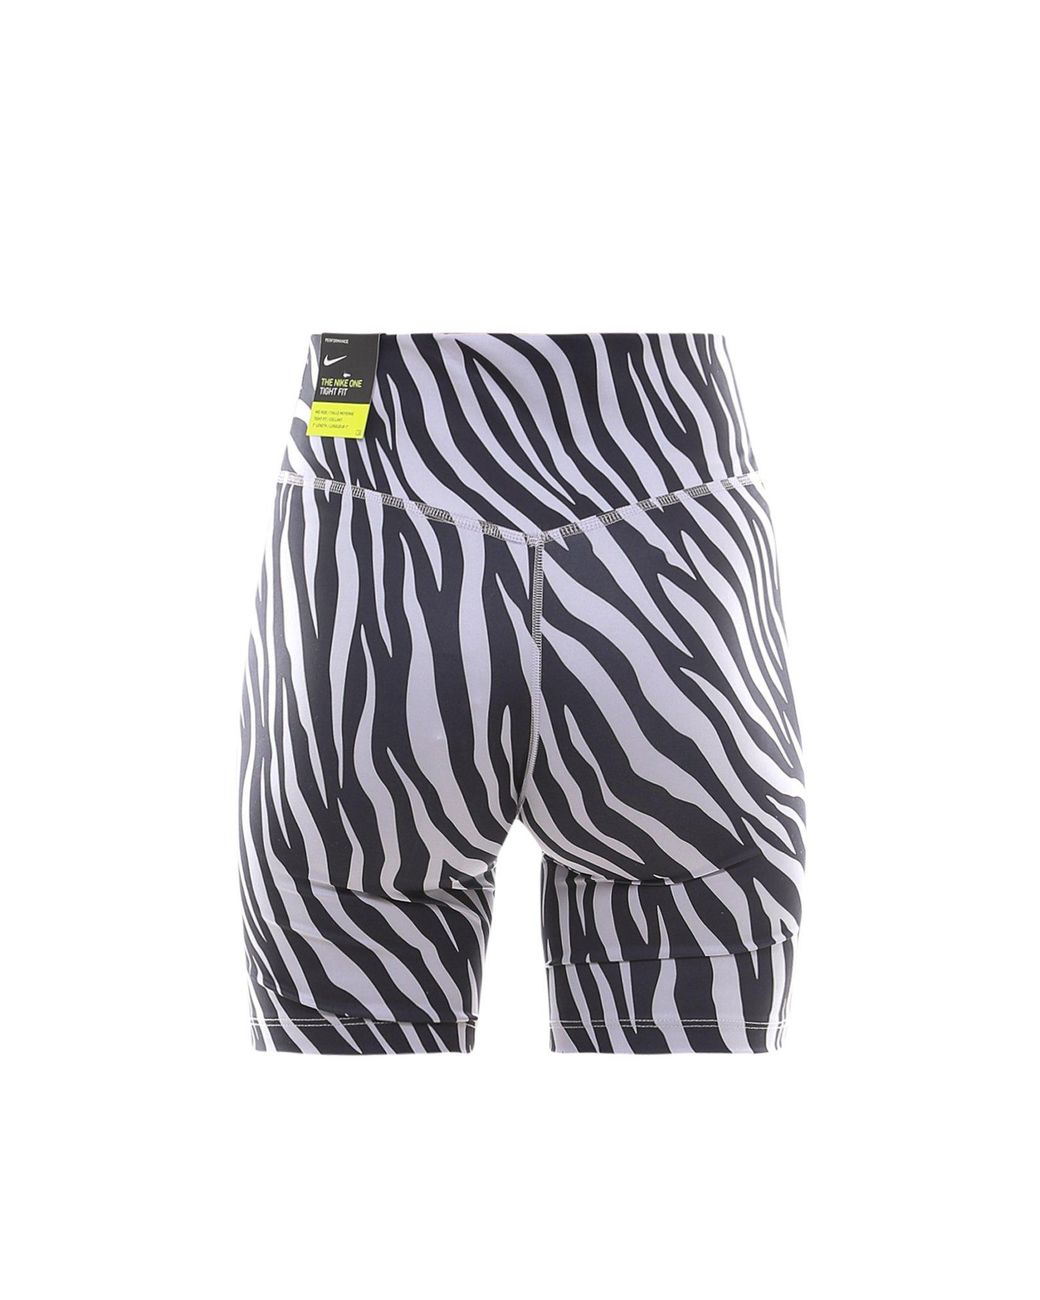 Nike Zebra Print Cycling Shorts | Lyst